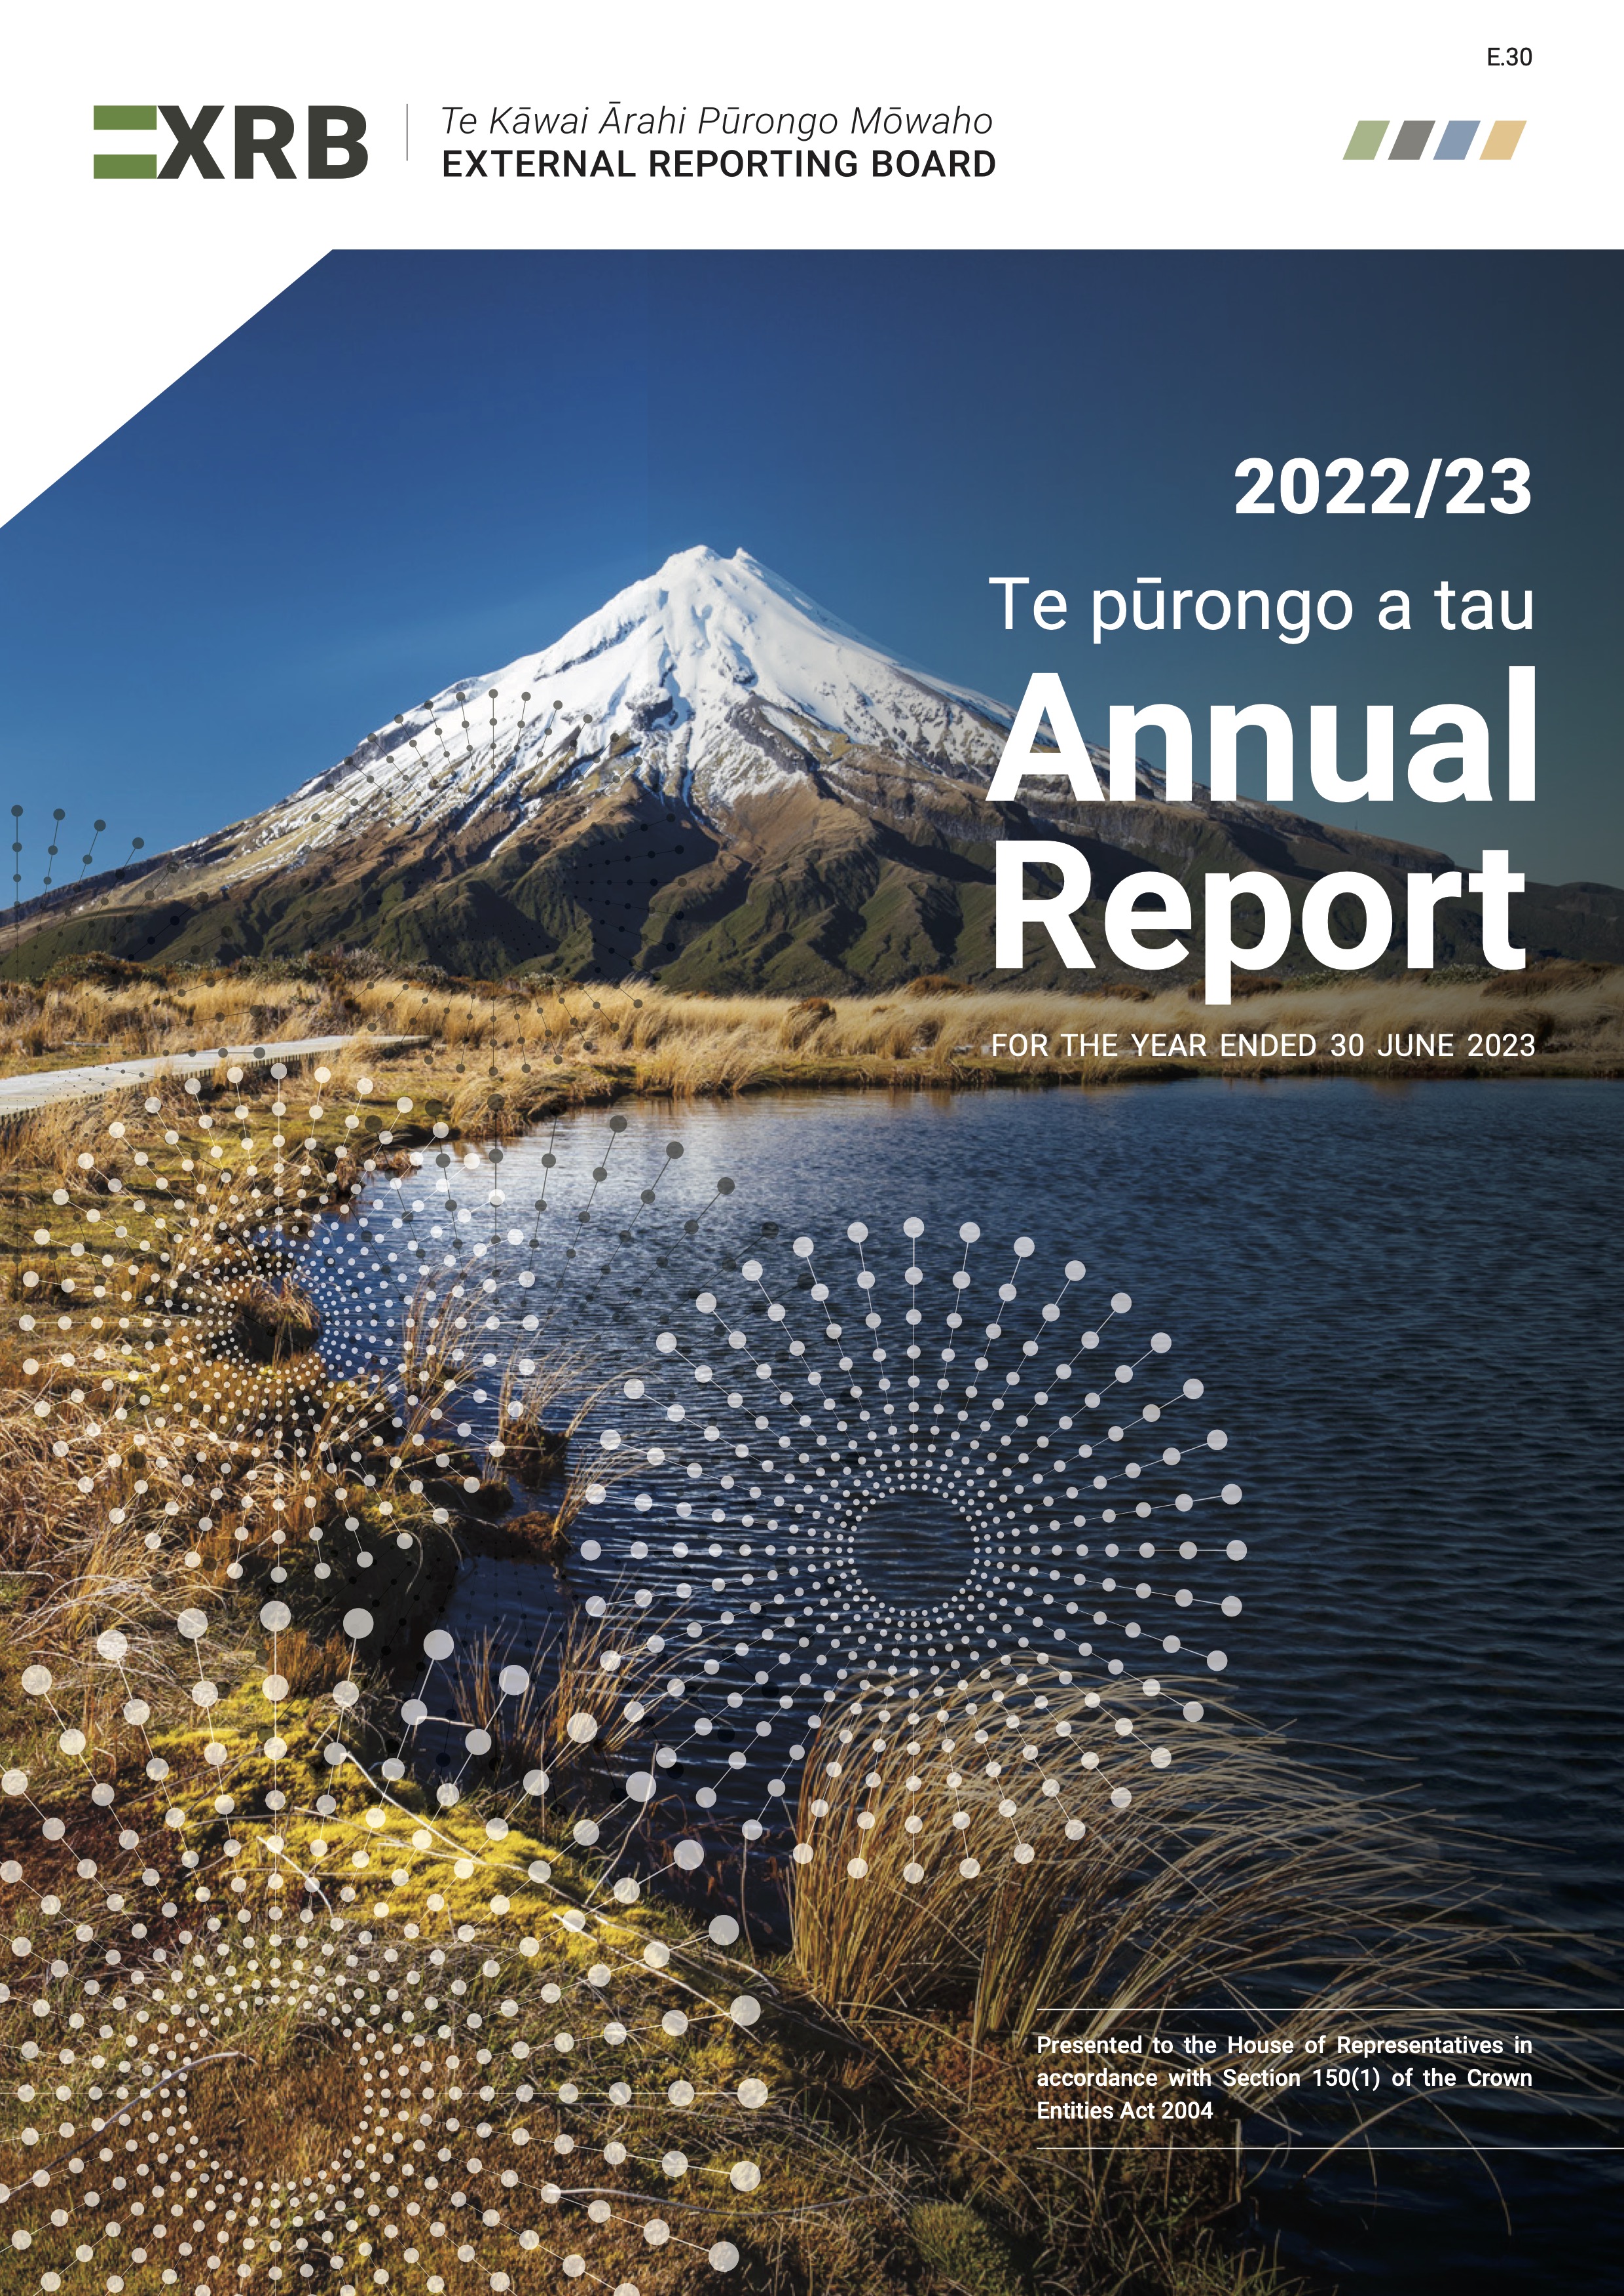 Latest Annual Report